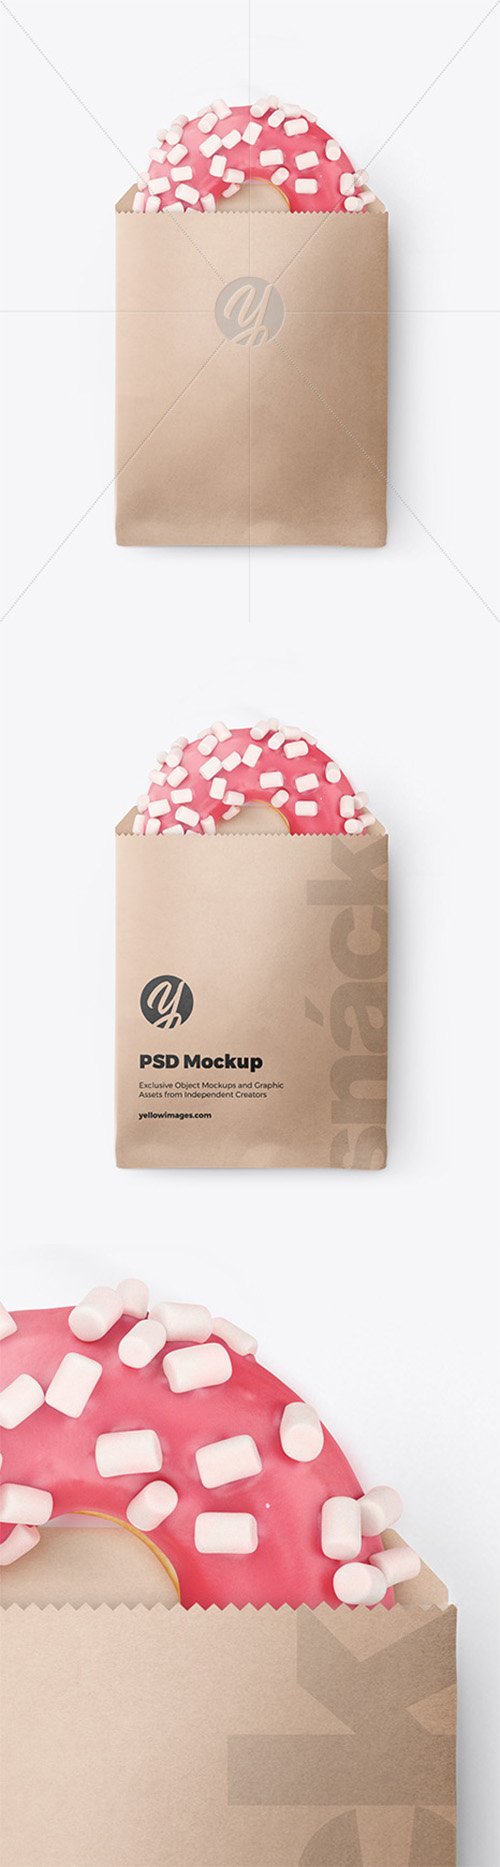 Paper Pack with Pink Glazed Donut Mockup 65070 TIF